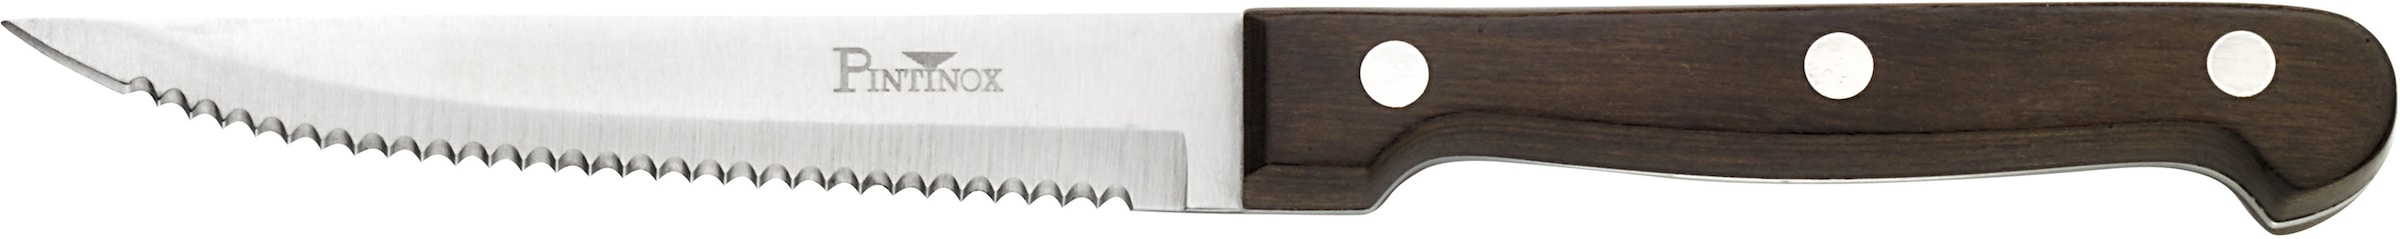 PINTINOX Grillpfanne »Chalet«, Aluminium, (Set, 5 tlg.), 28x28 cm, Induktionsgeeignet, inkl. 4 Steakmesser